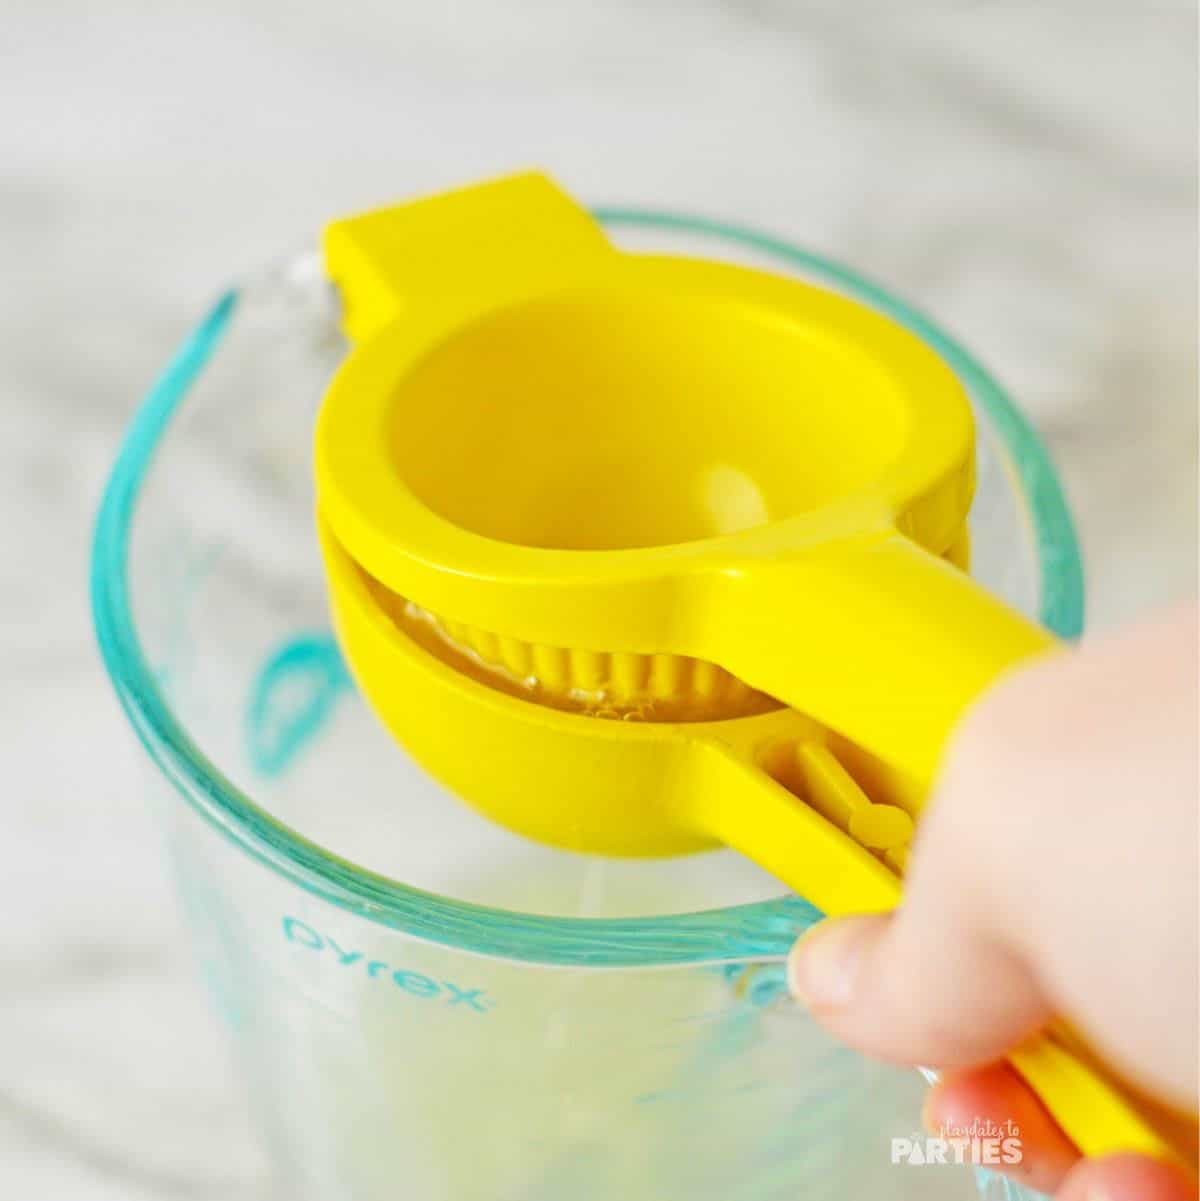 Using a citrus juicer over a liquid measuring cup.